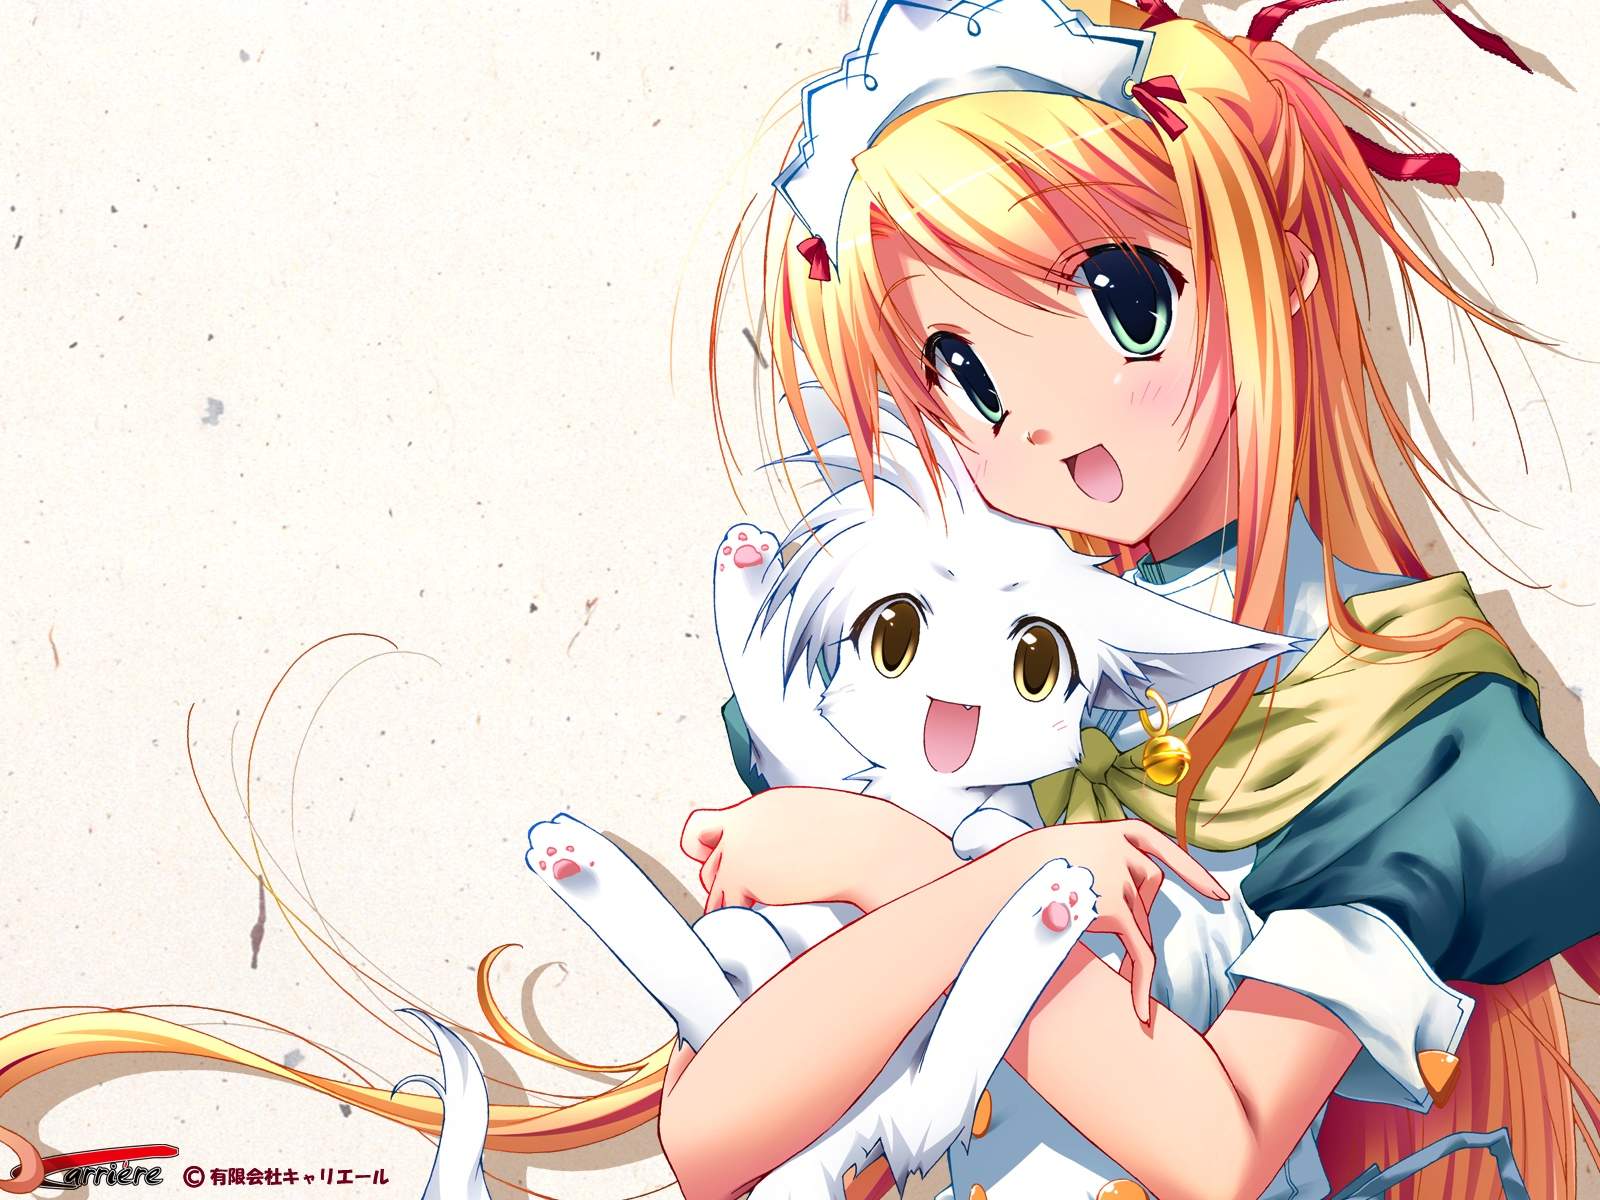 Cute Anime Wallpapers Free Download Wallpaper DaWallpaperz